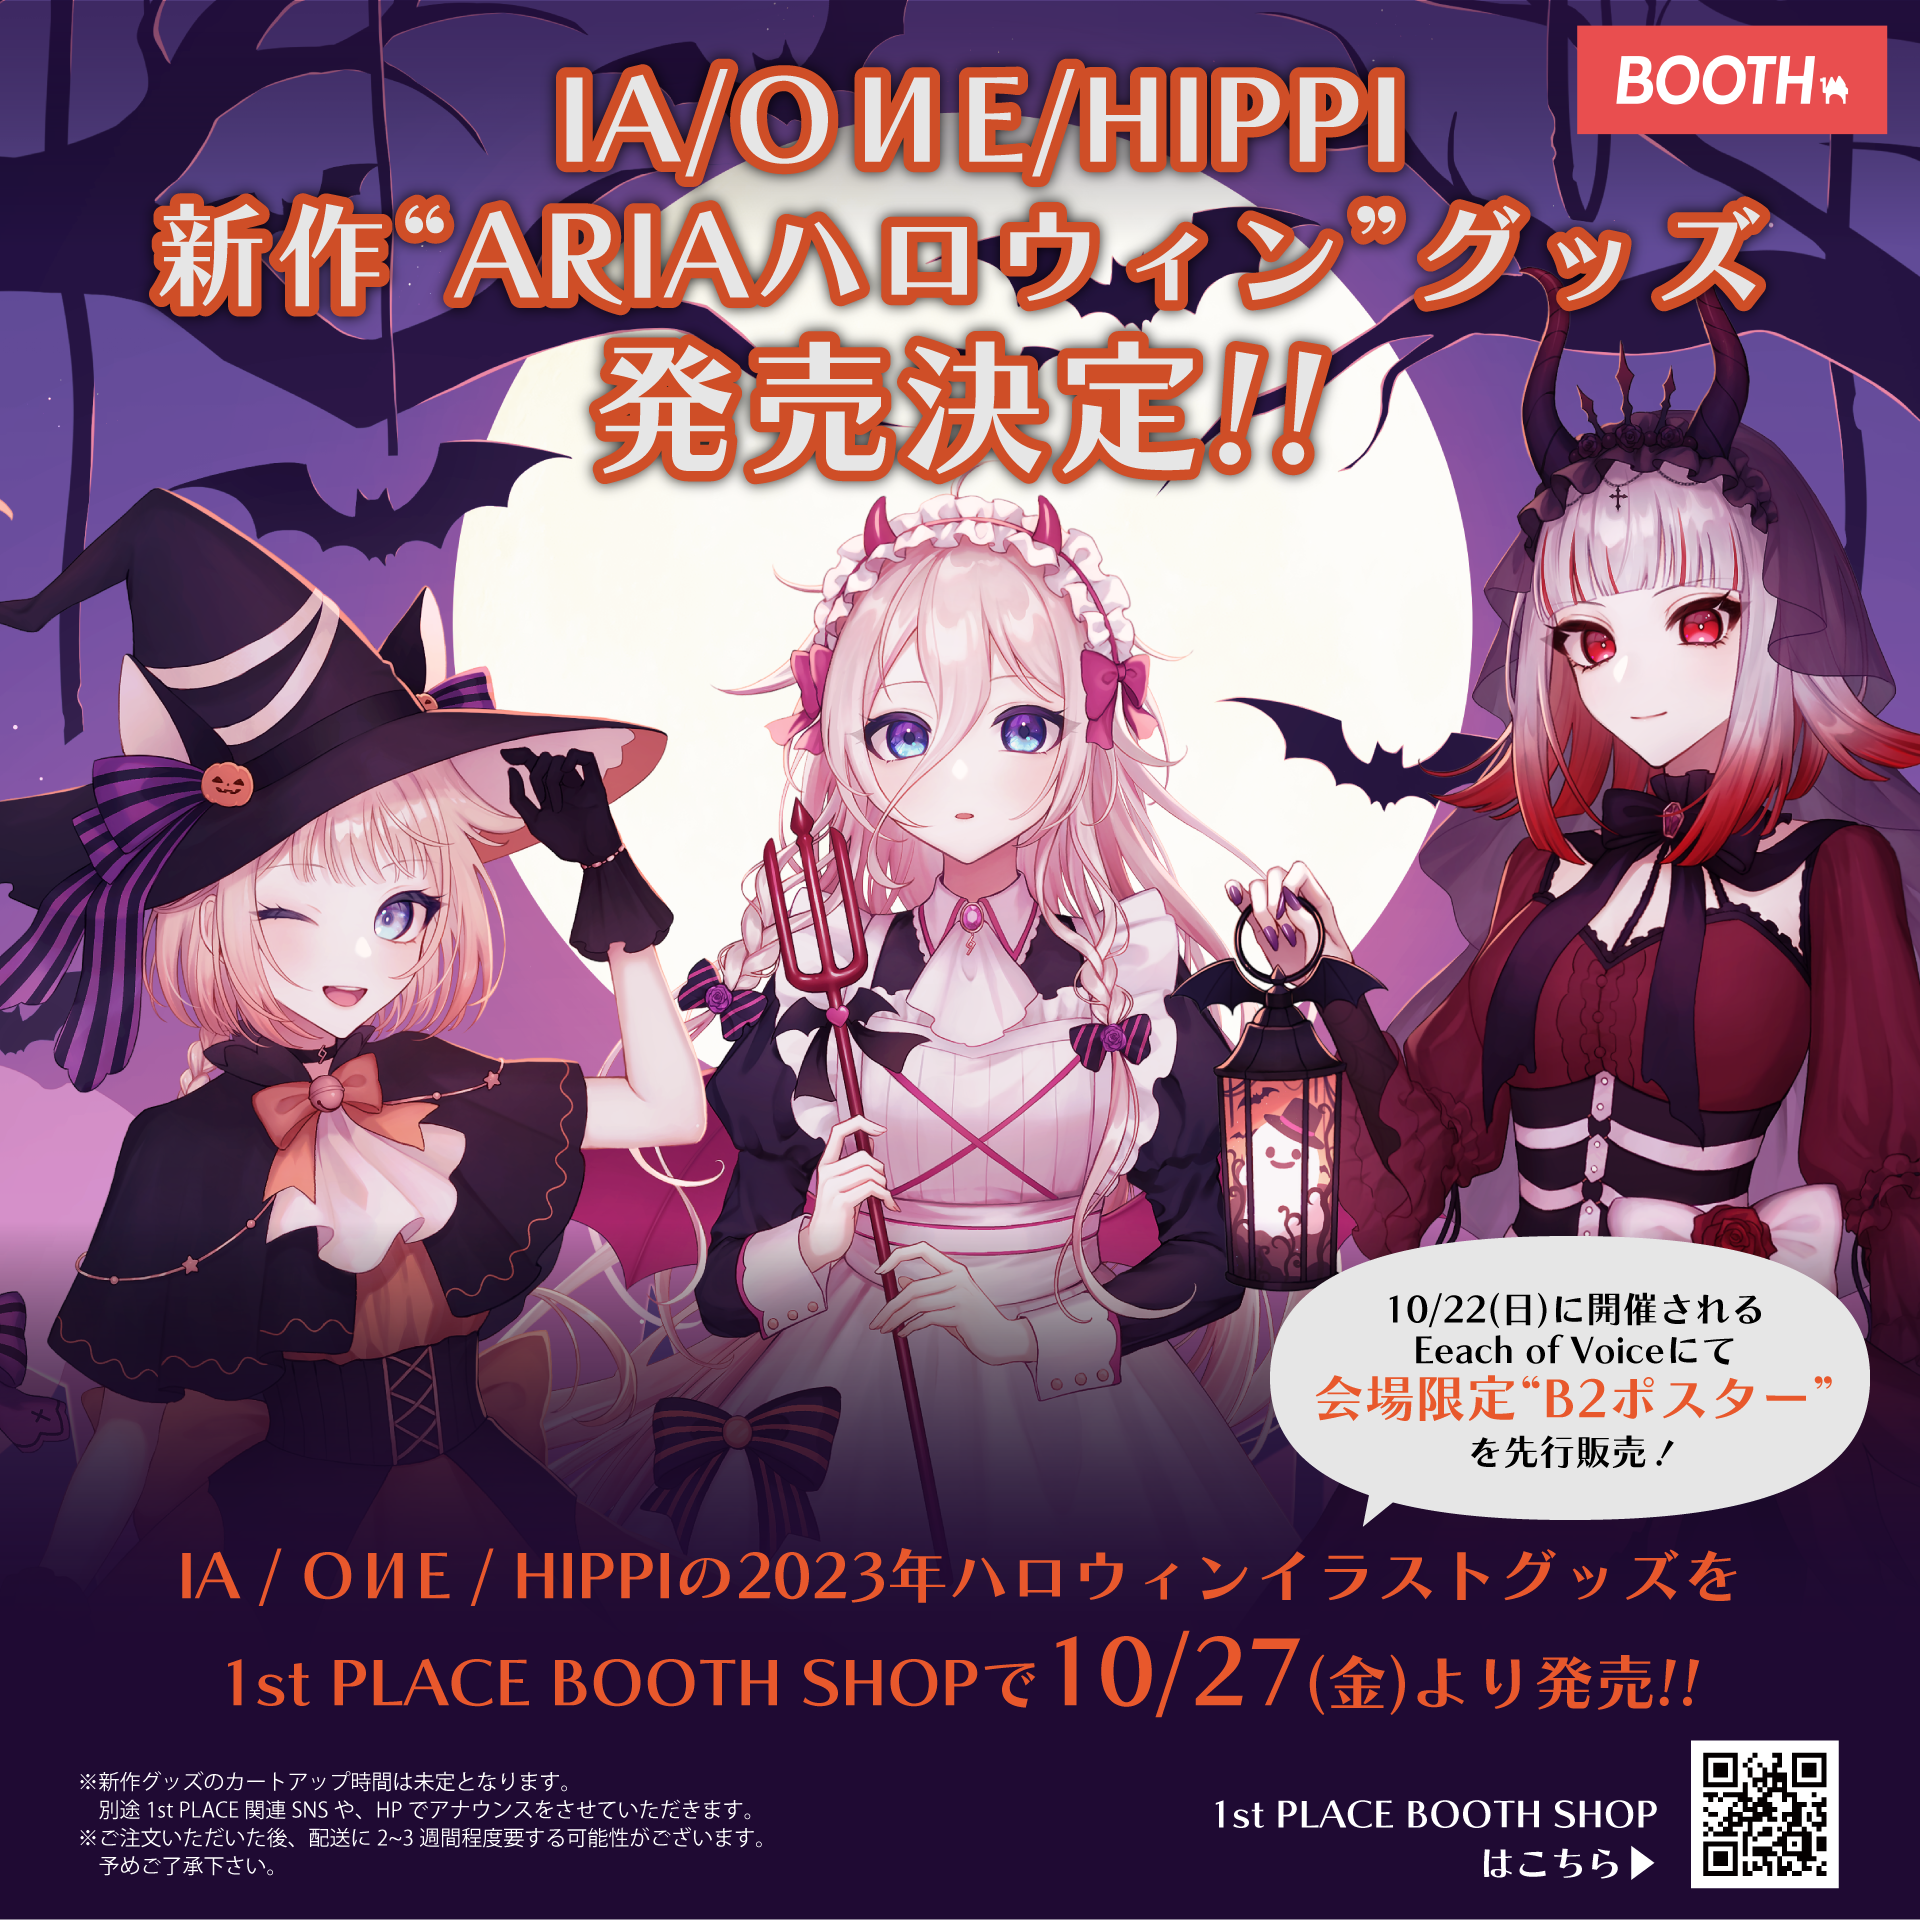 【EVENT / GOODS INFO】IA / OИE / HIPPIの最新ハロウィングッズも販売!! 10/22(日) 開催「Each of Voice.2023」での販売ラインナップ公開!!